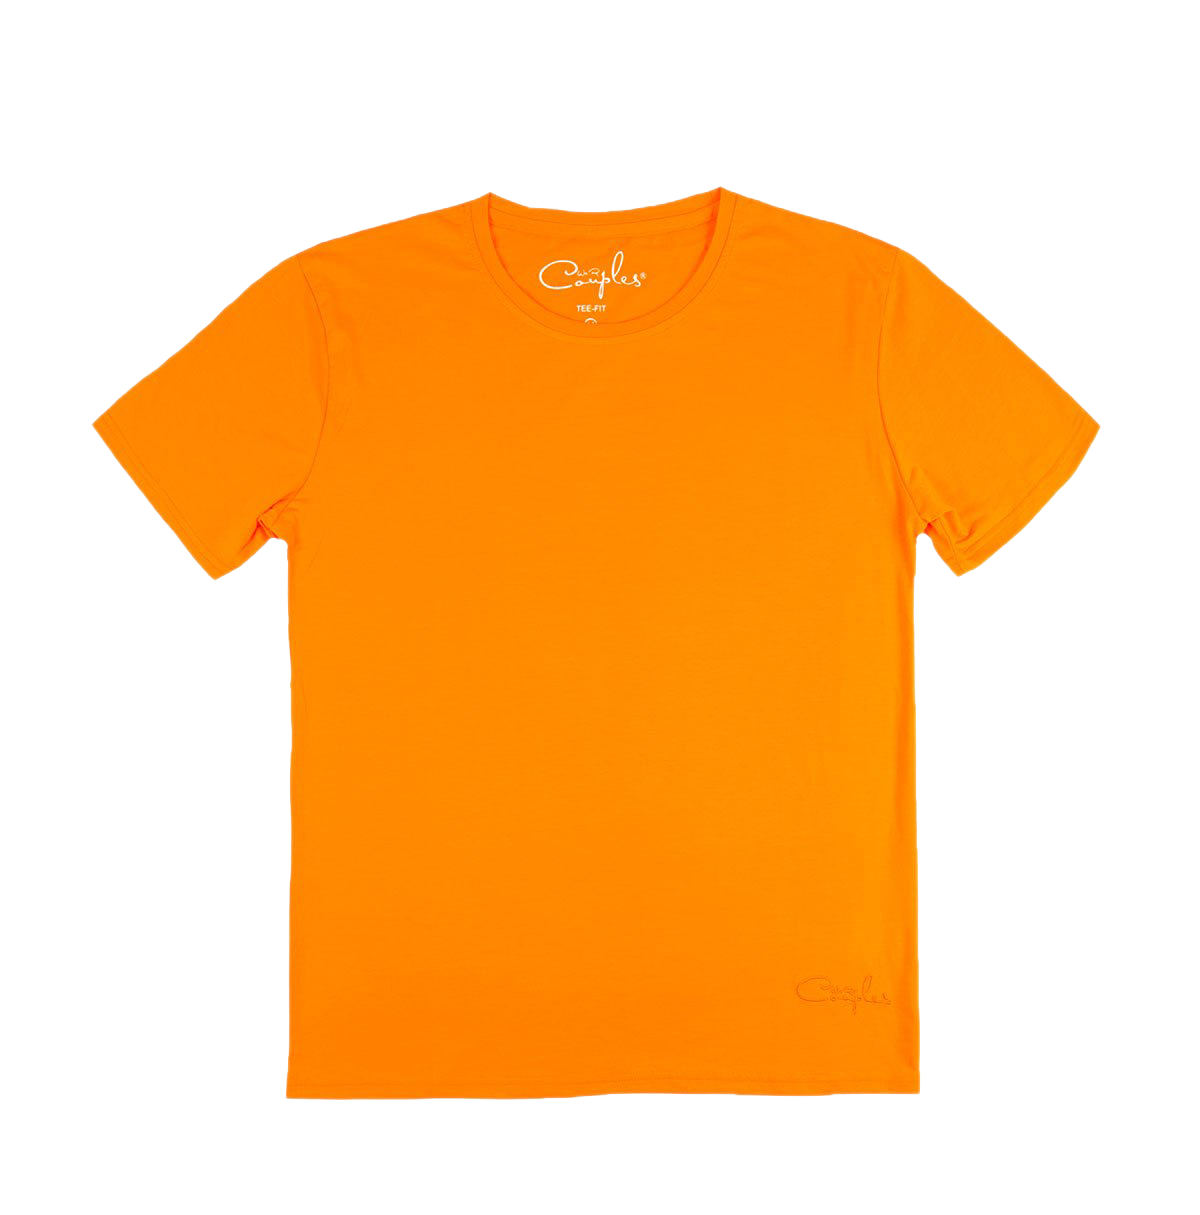 Plain Orange T-Shirt Download Transparent PNG Image